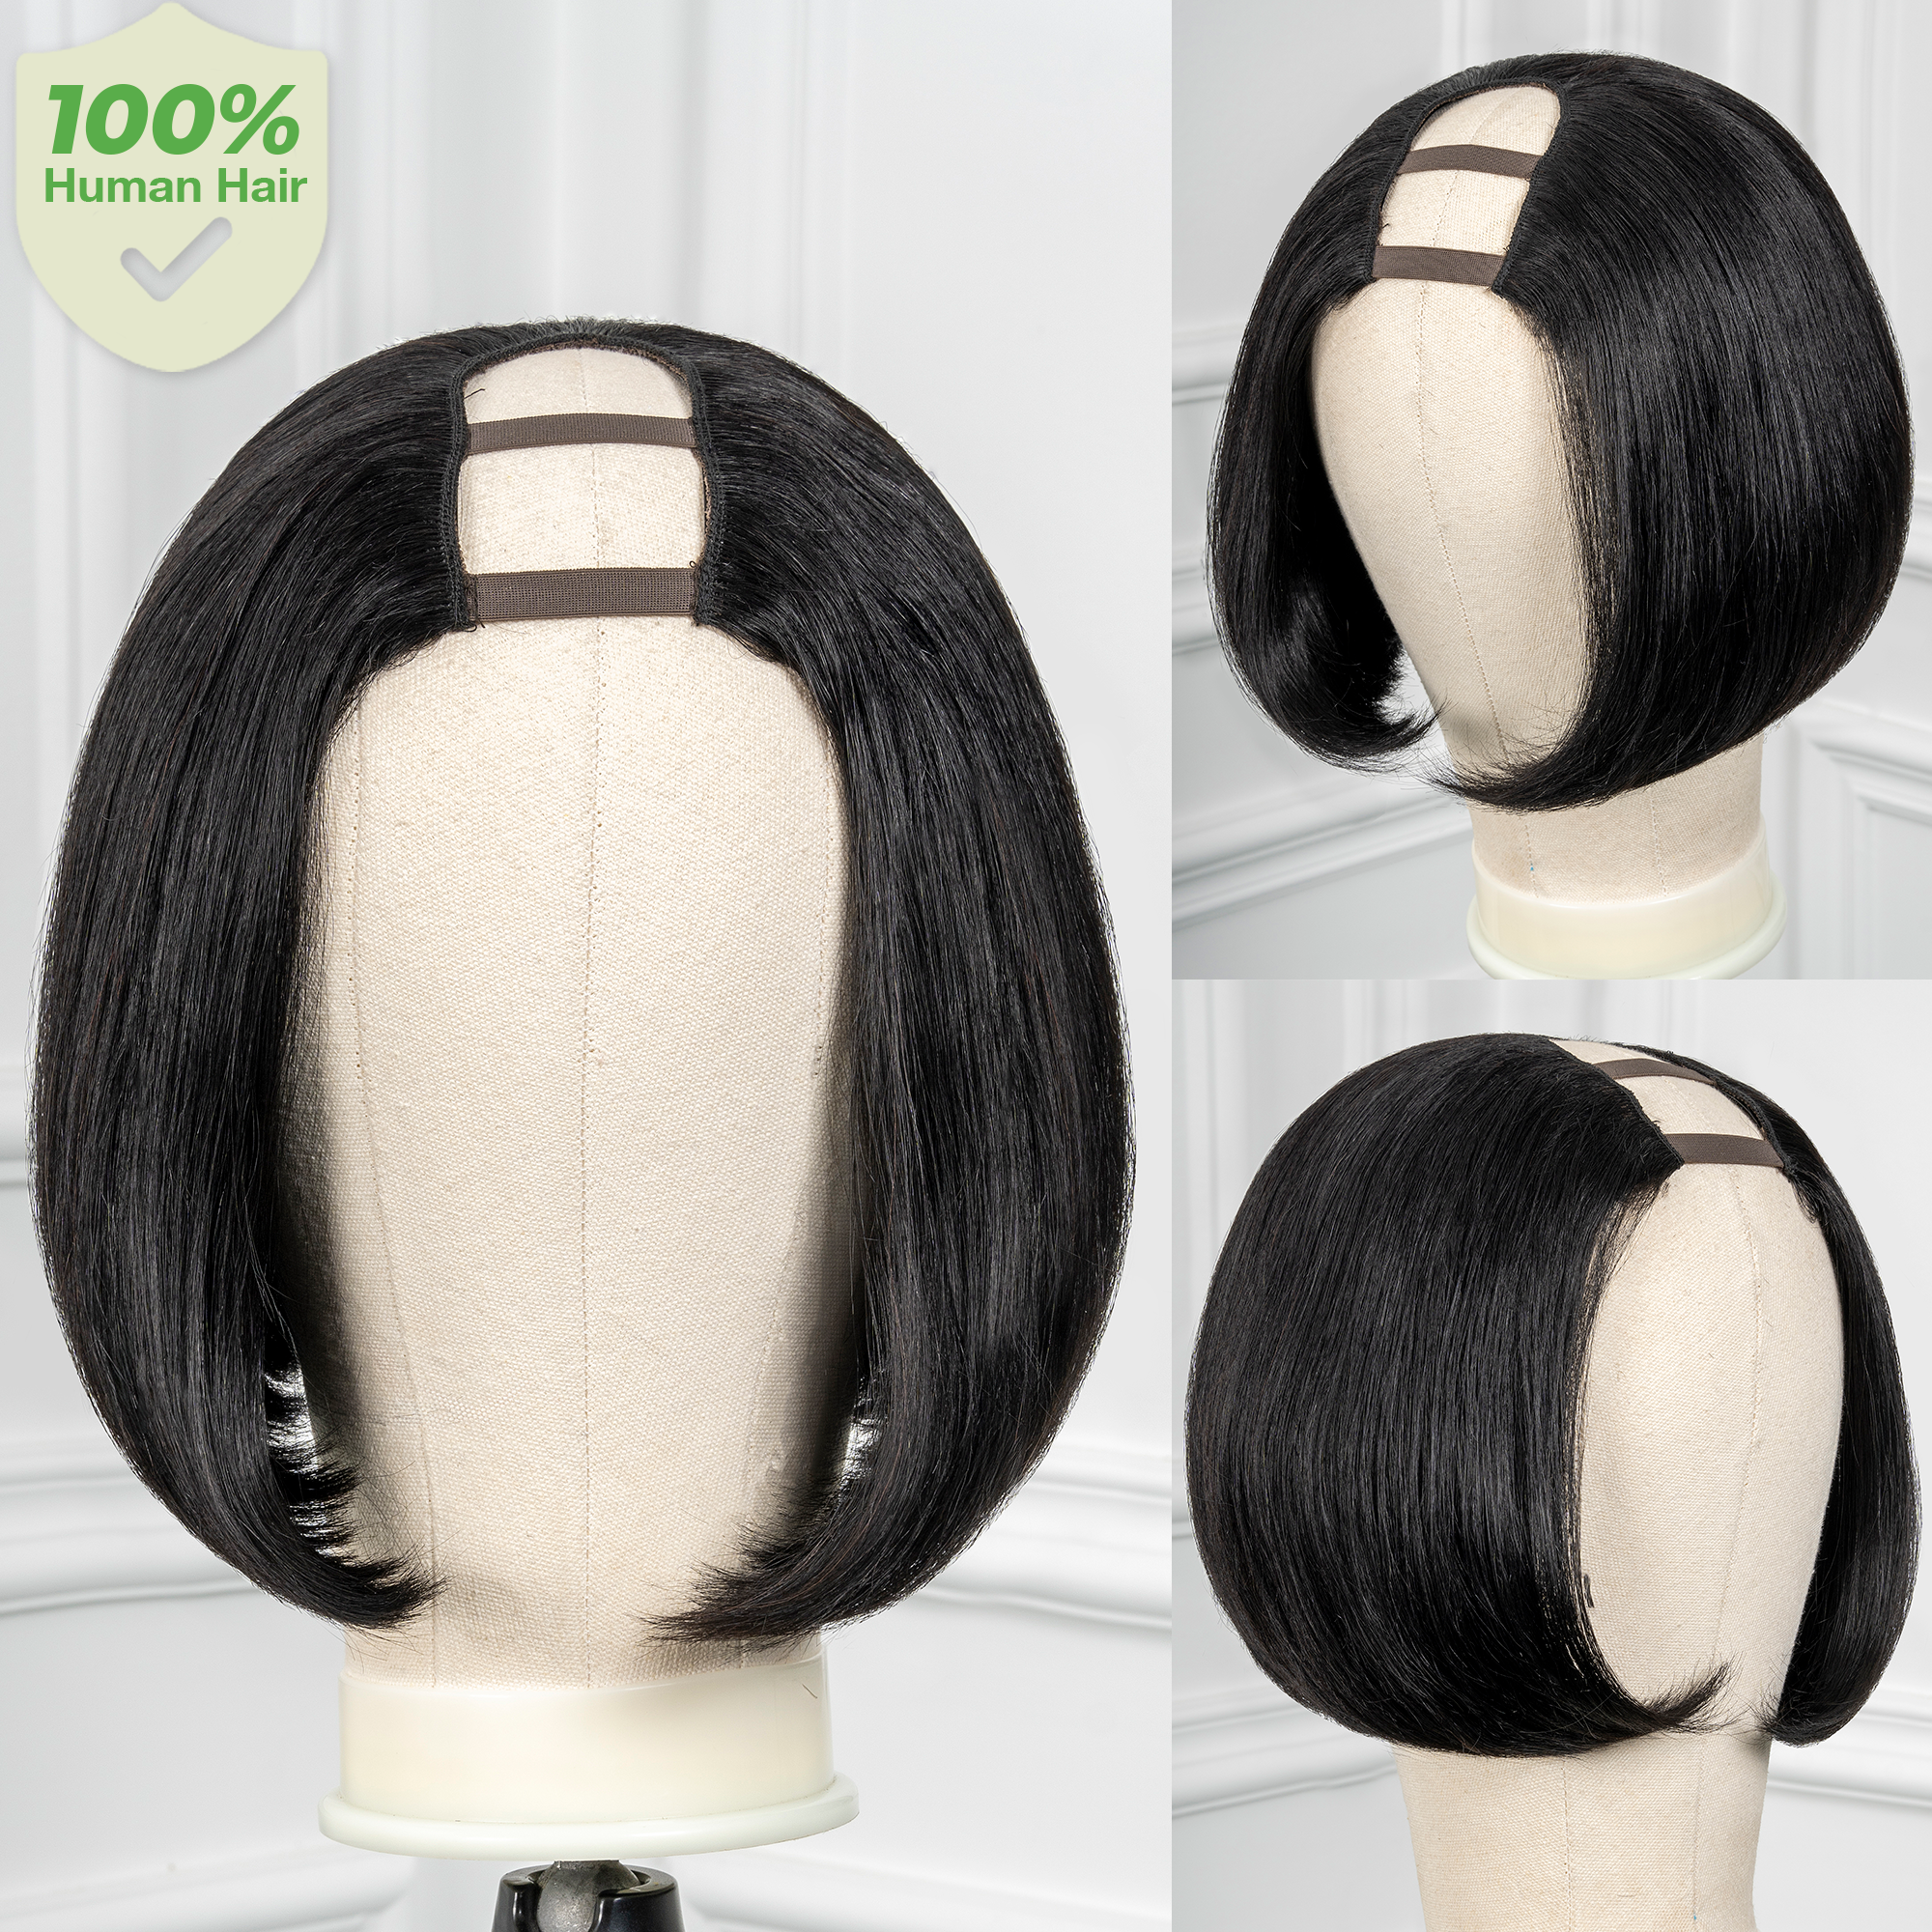 Toyotress U-Part Bob Human Hair Wigs | 8-10 Inch Short Straight Natural Black Glueless Wigs for Black Women, Light Yaki Unprocessed 100% Brazilian Virgin Hair U-part Clip In Wigs 180% Density (U-part)